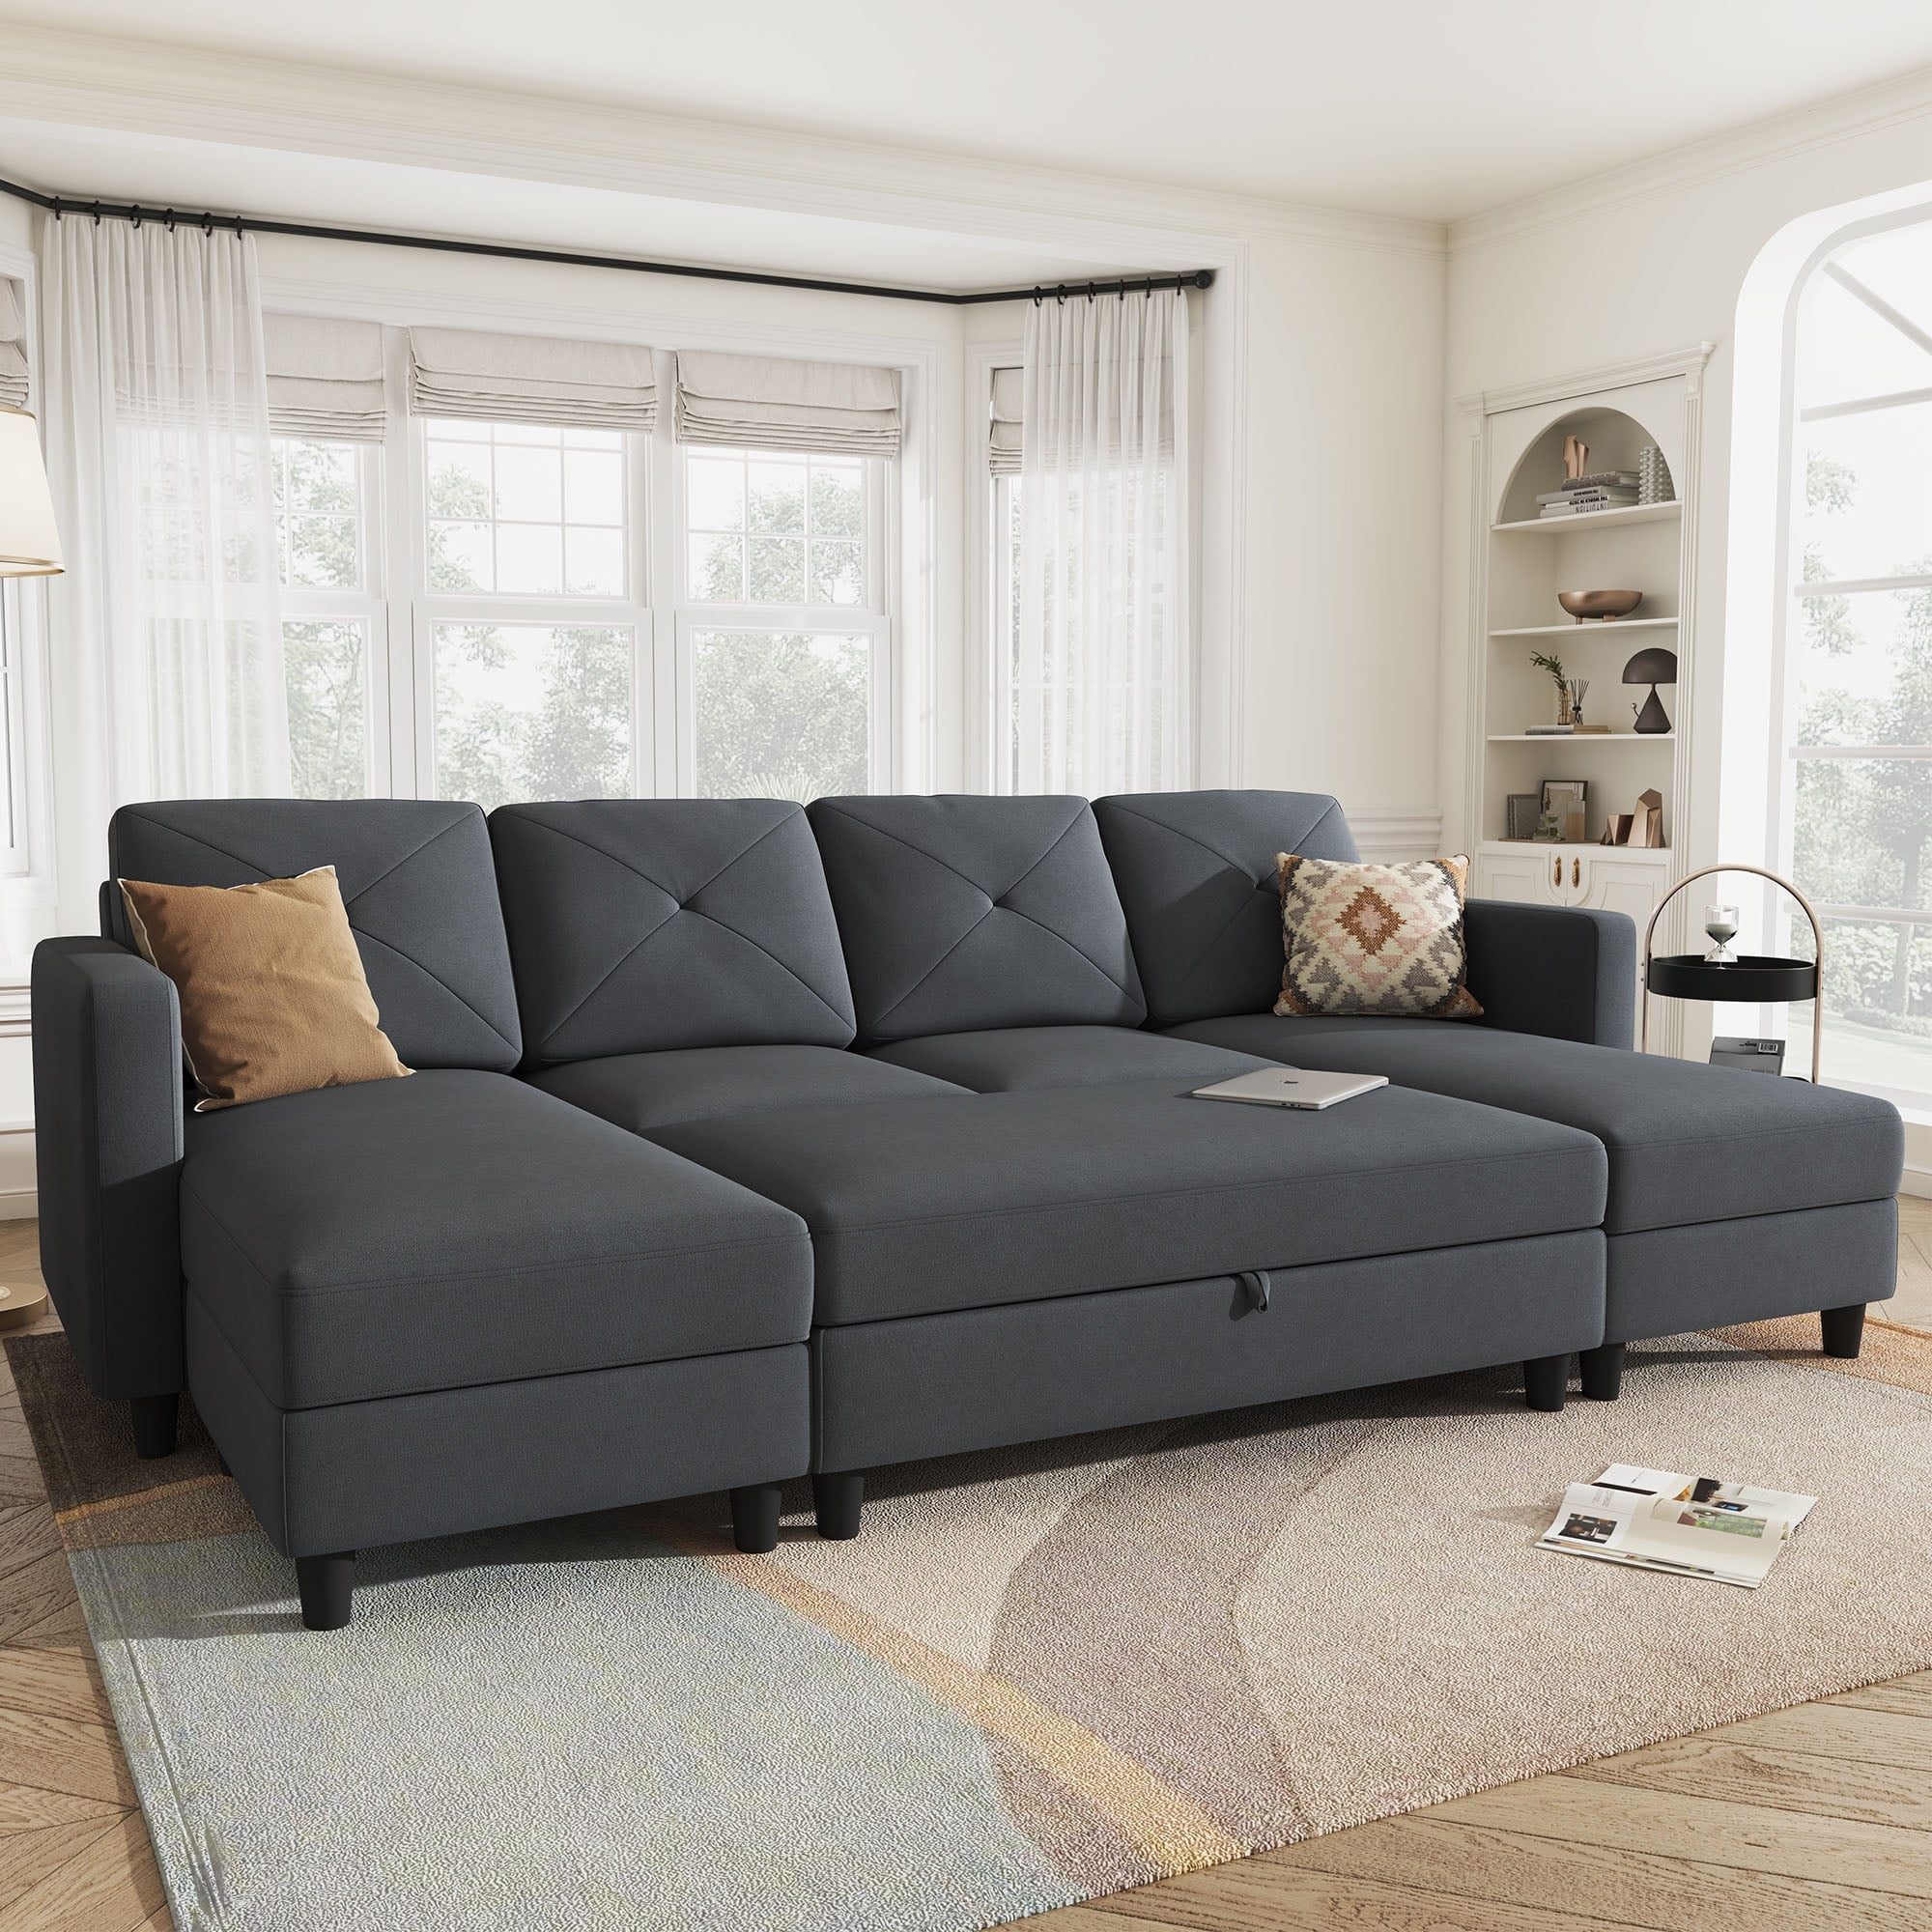 Honbay Convertible Sectional Sofa Bed